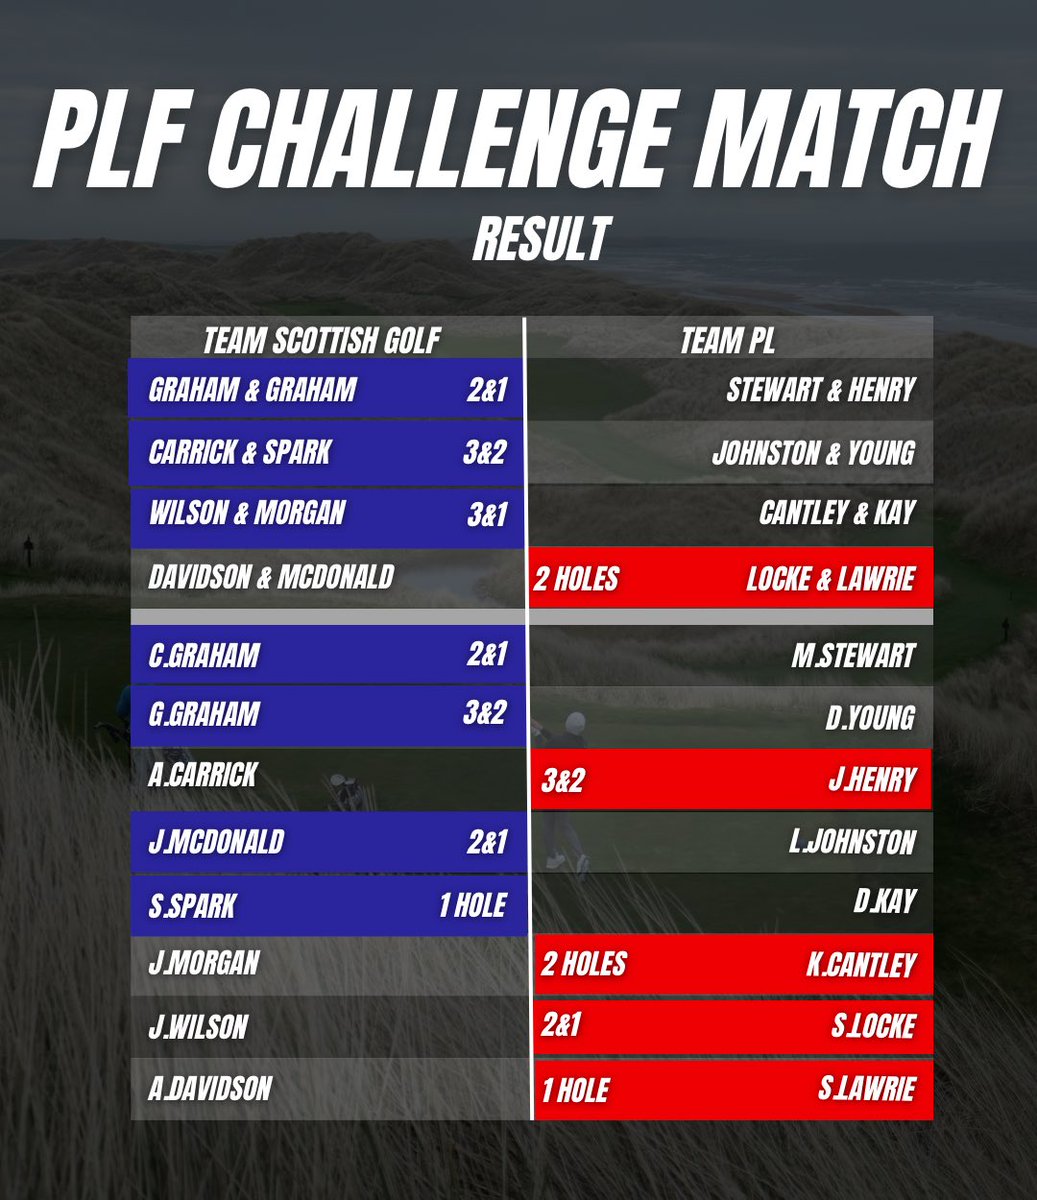 Yesterday’s match results 📊🏆 #PLFChallengeMatch